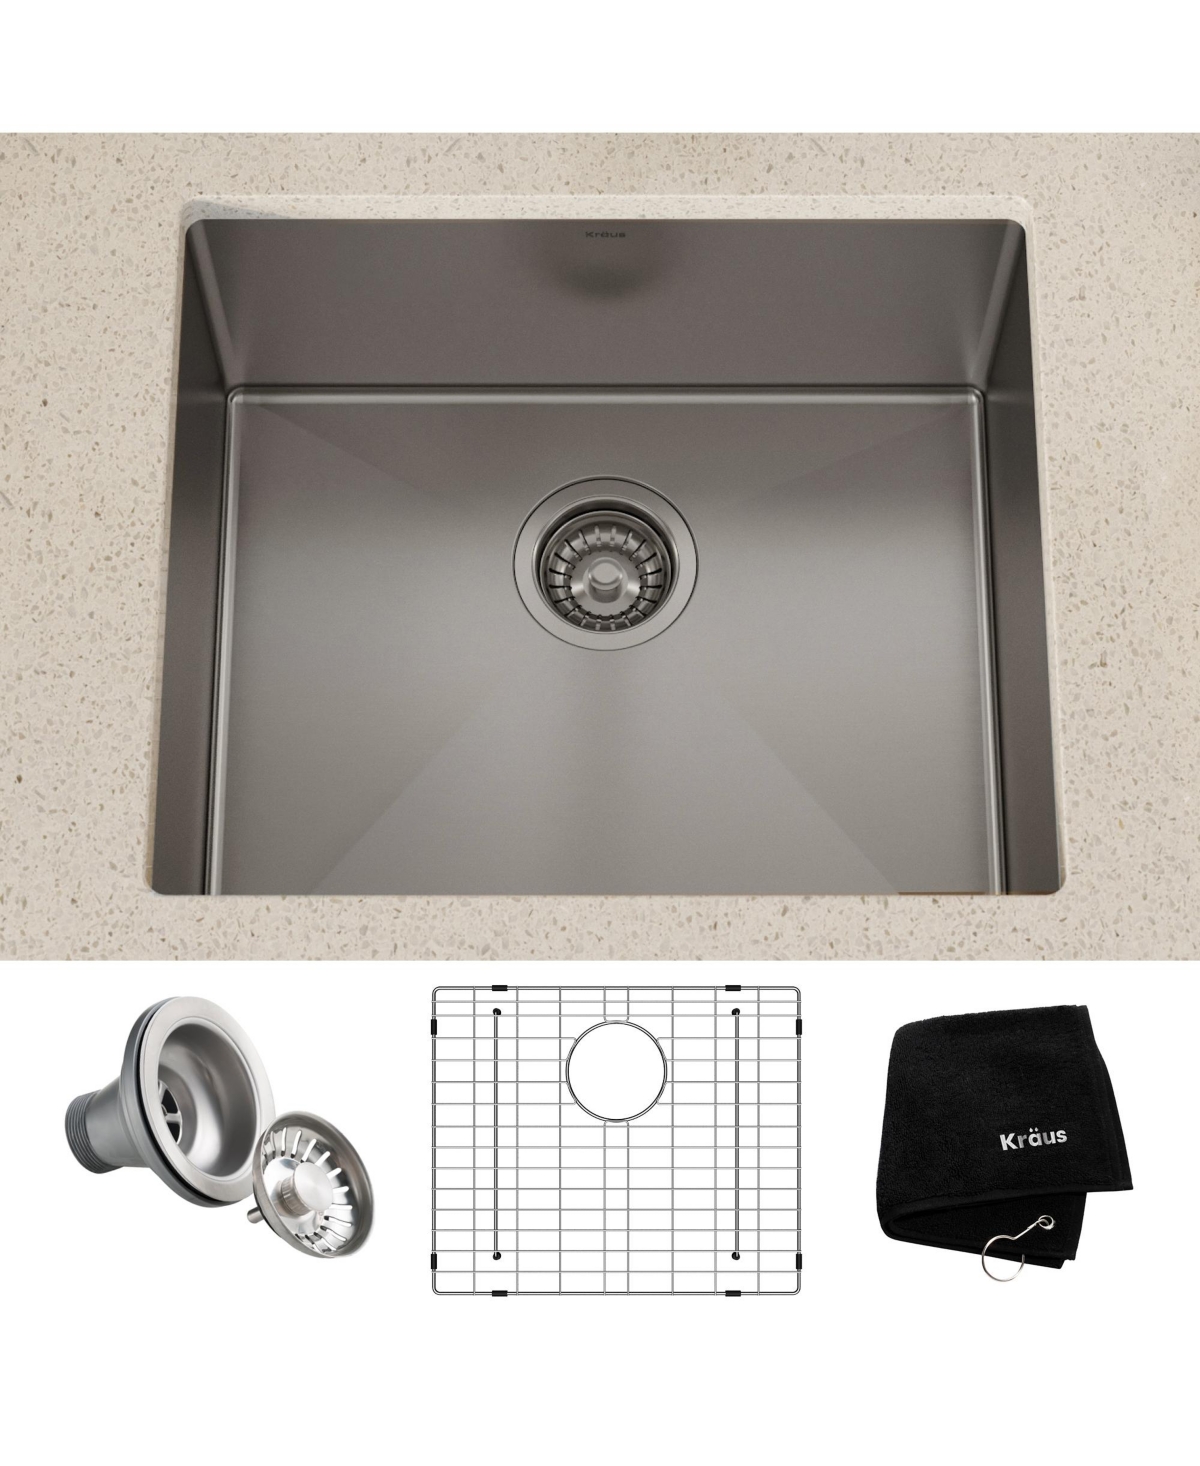 Standart Pro 21 in. 16 Gauge Undermount Single Bowl Stainless Steel Kitchen Sink - Stainless steel